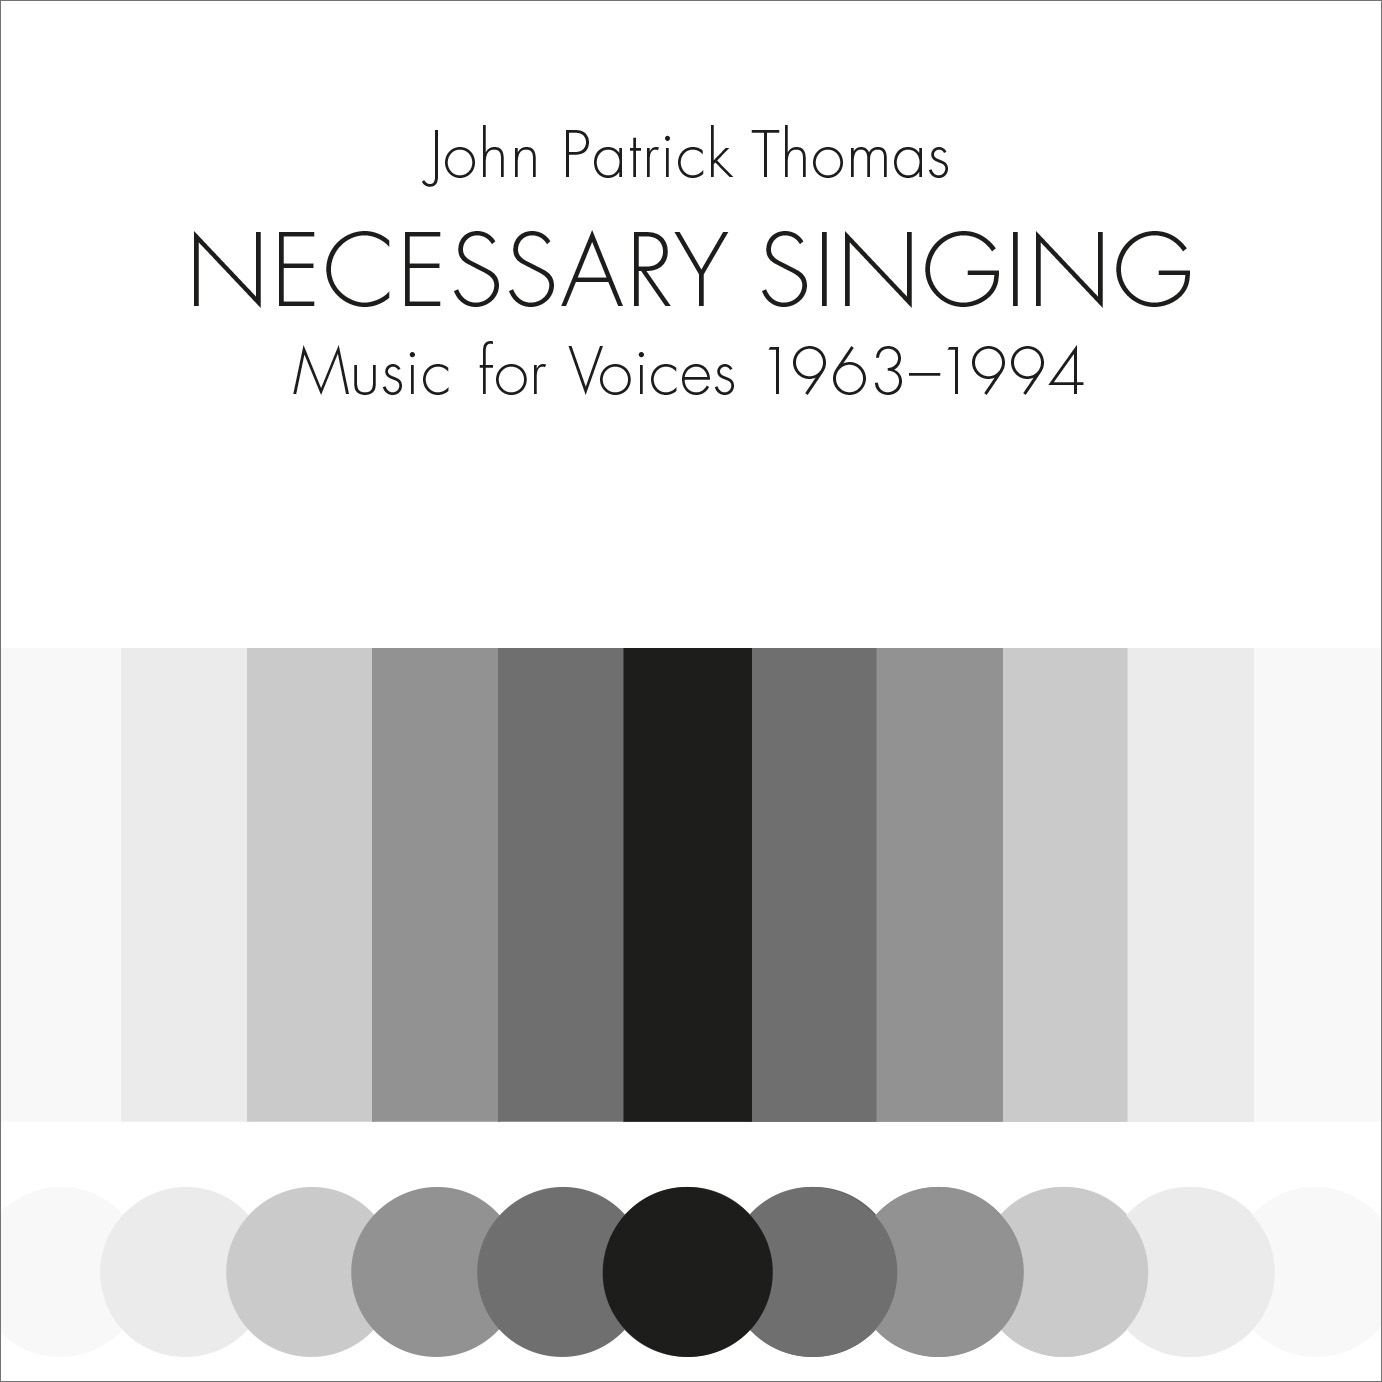 Recording - Necessary Singing - John Patrick Thomas